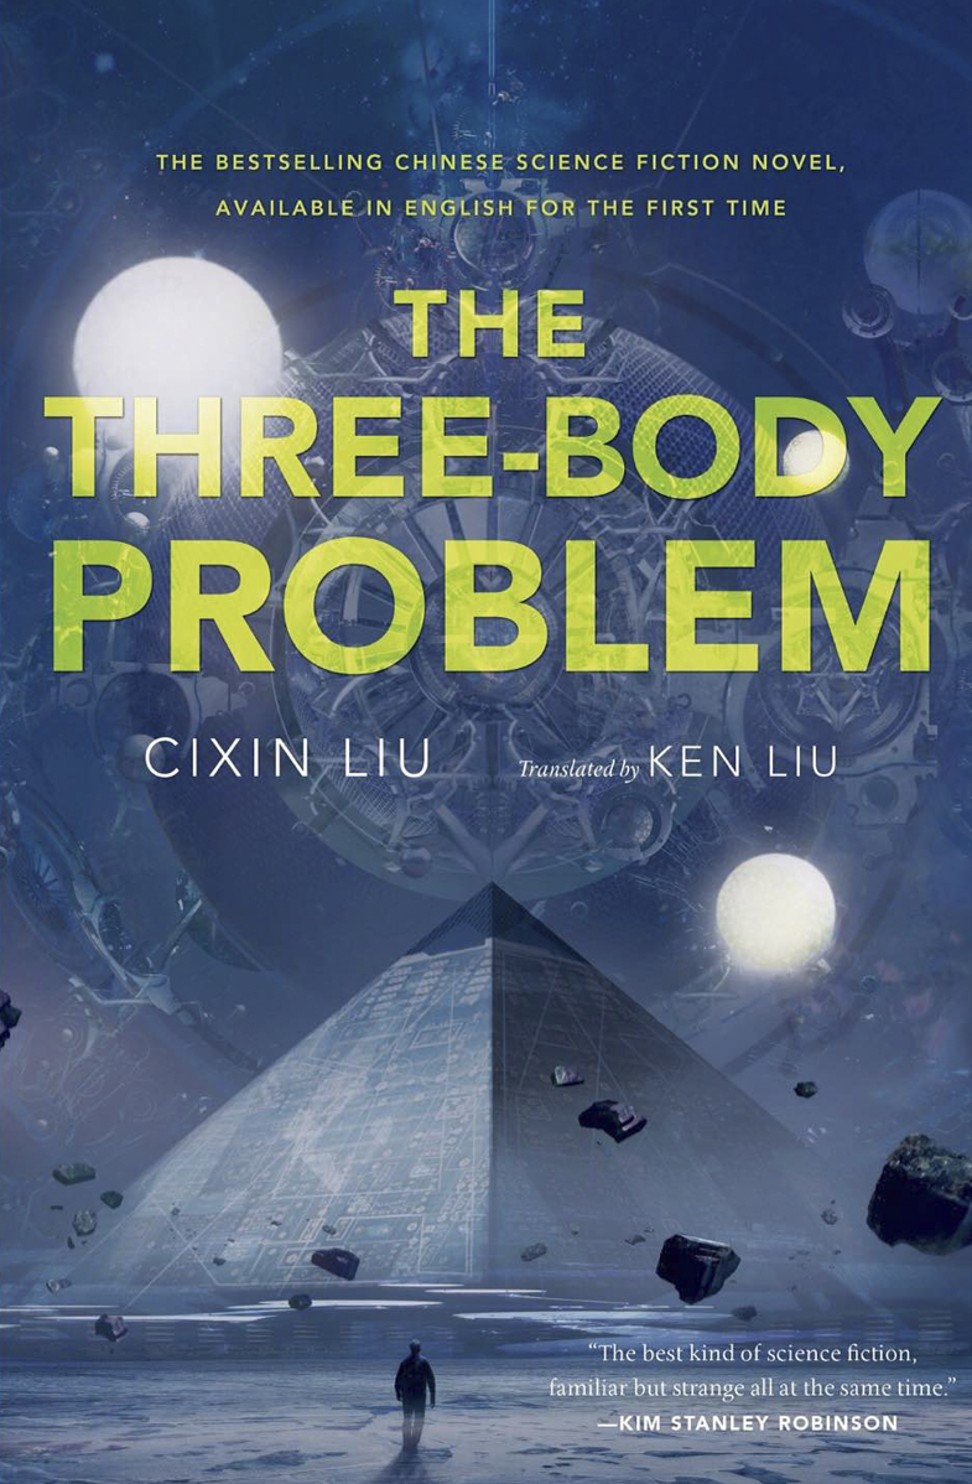 The Three-Body Problem – a fun break from the heavier stuff he’s reading, says Zuckerberg.